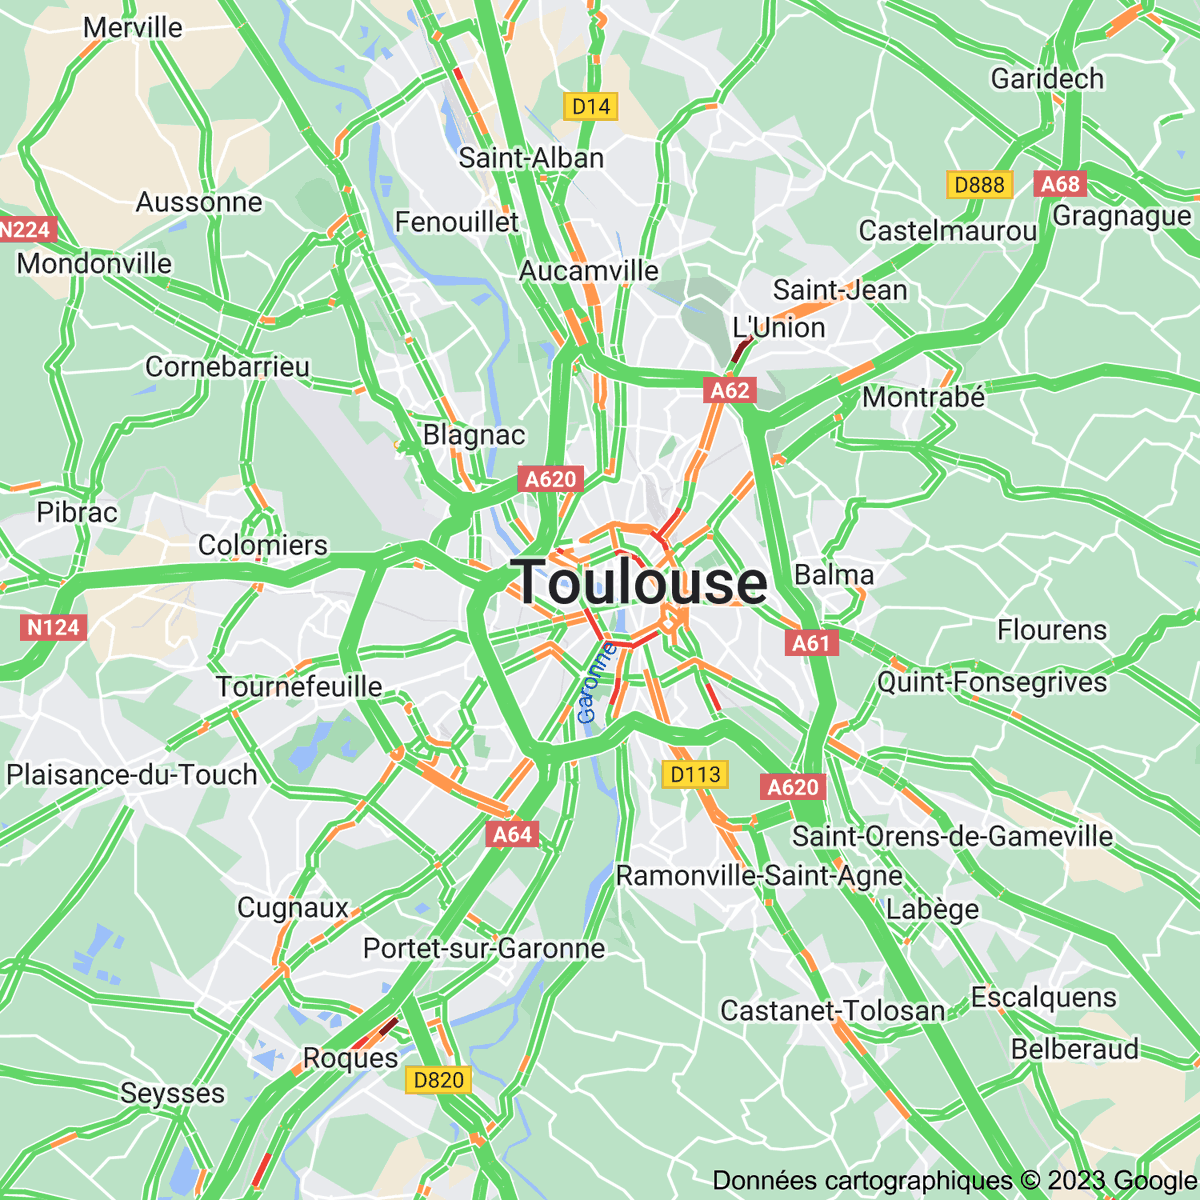 [FLASH 19:40] Trafic à Toulouse toulousetrafic.com #Toulouse #ToulousePeriph #InfoTrafic